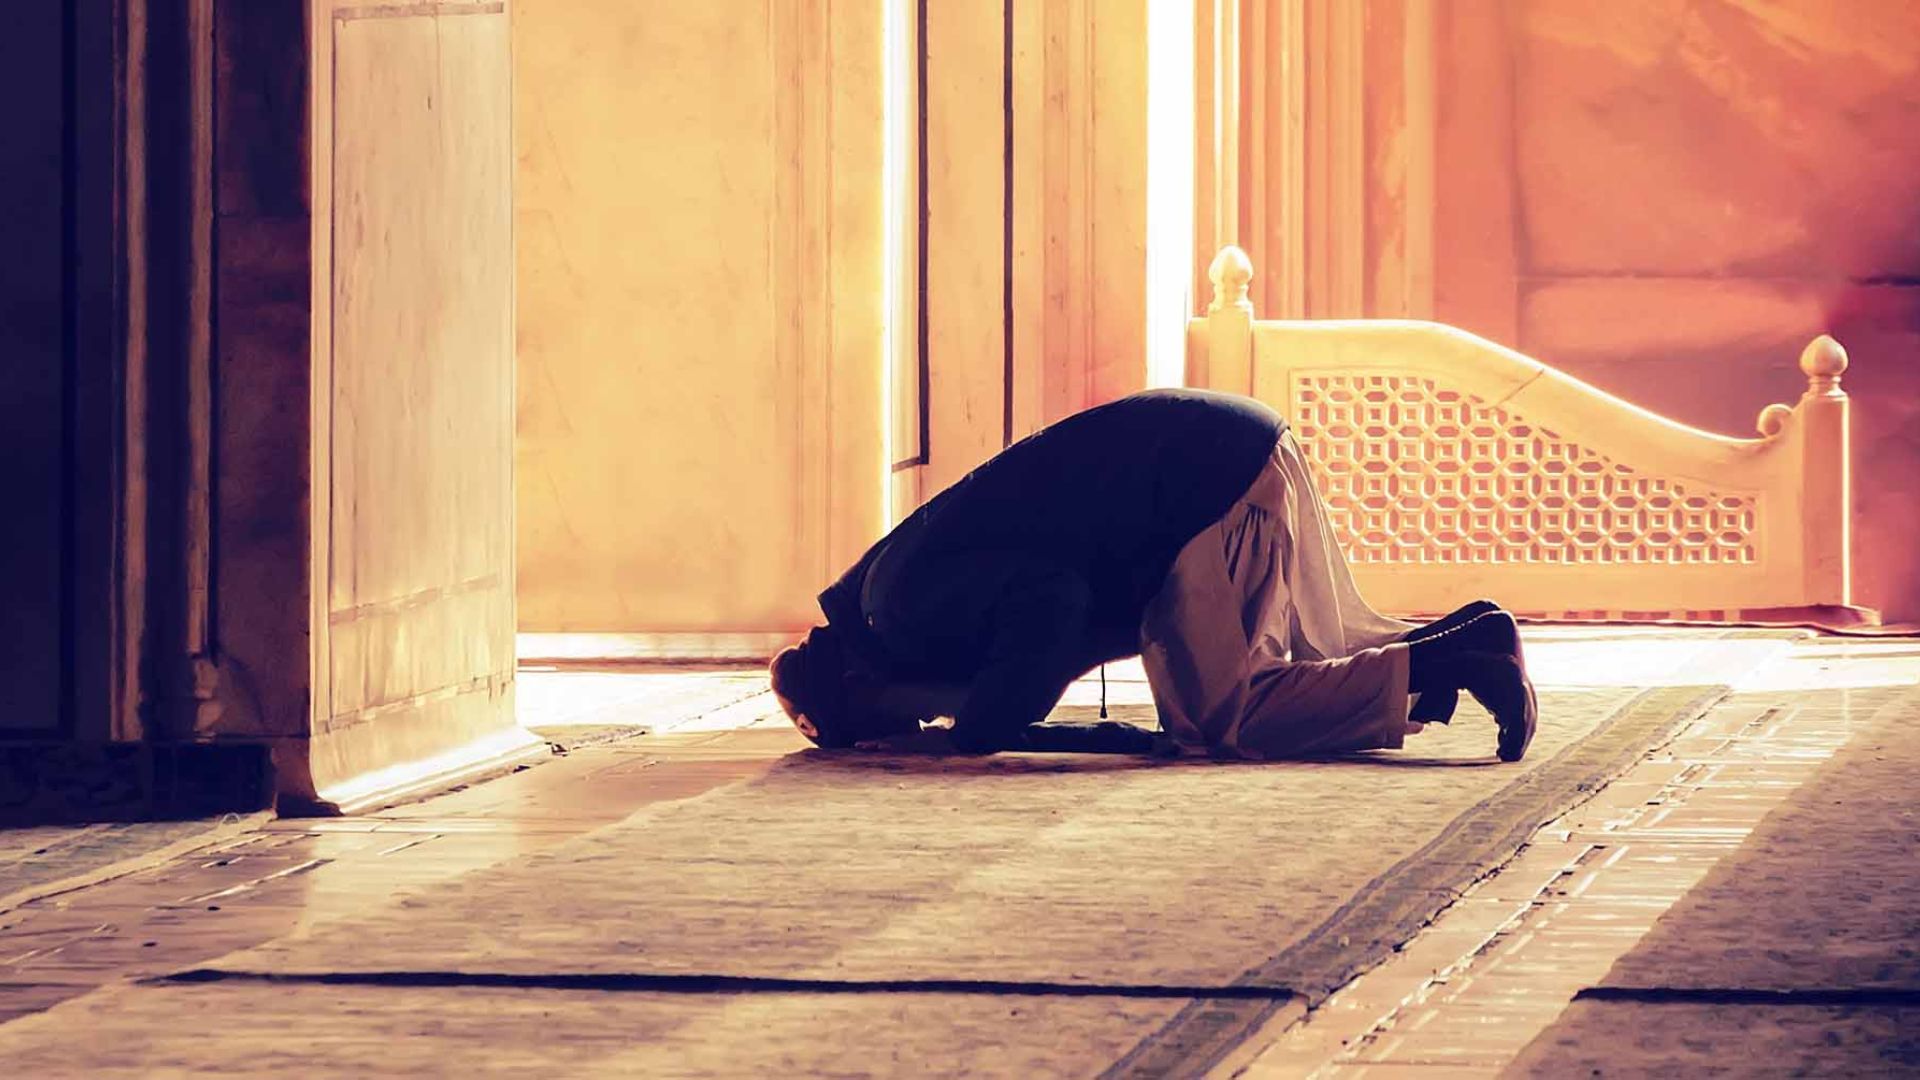 A Muslim Man Praying In Mosque